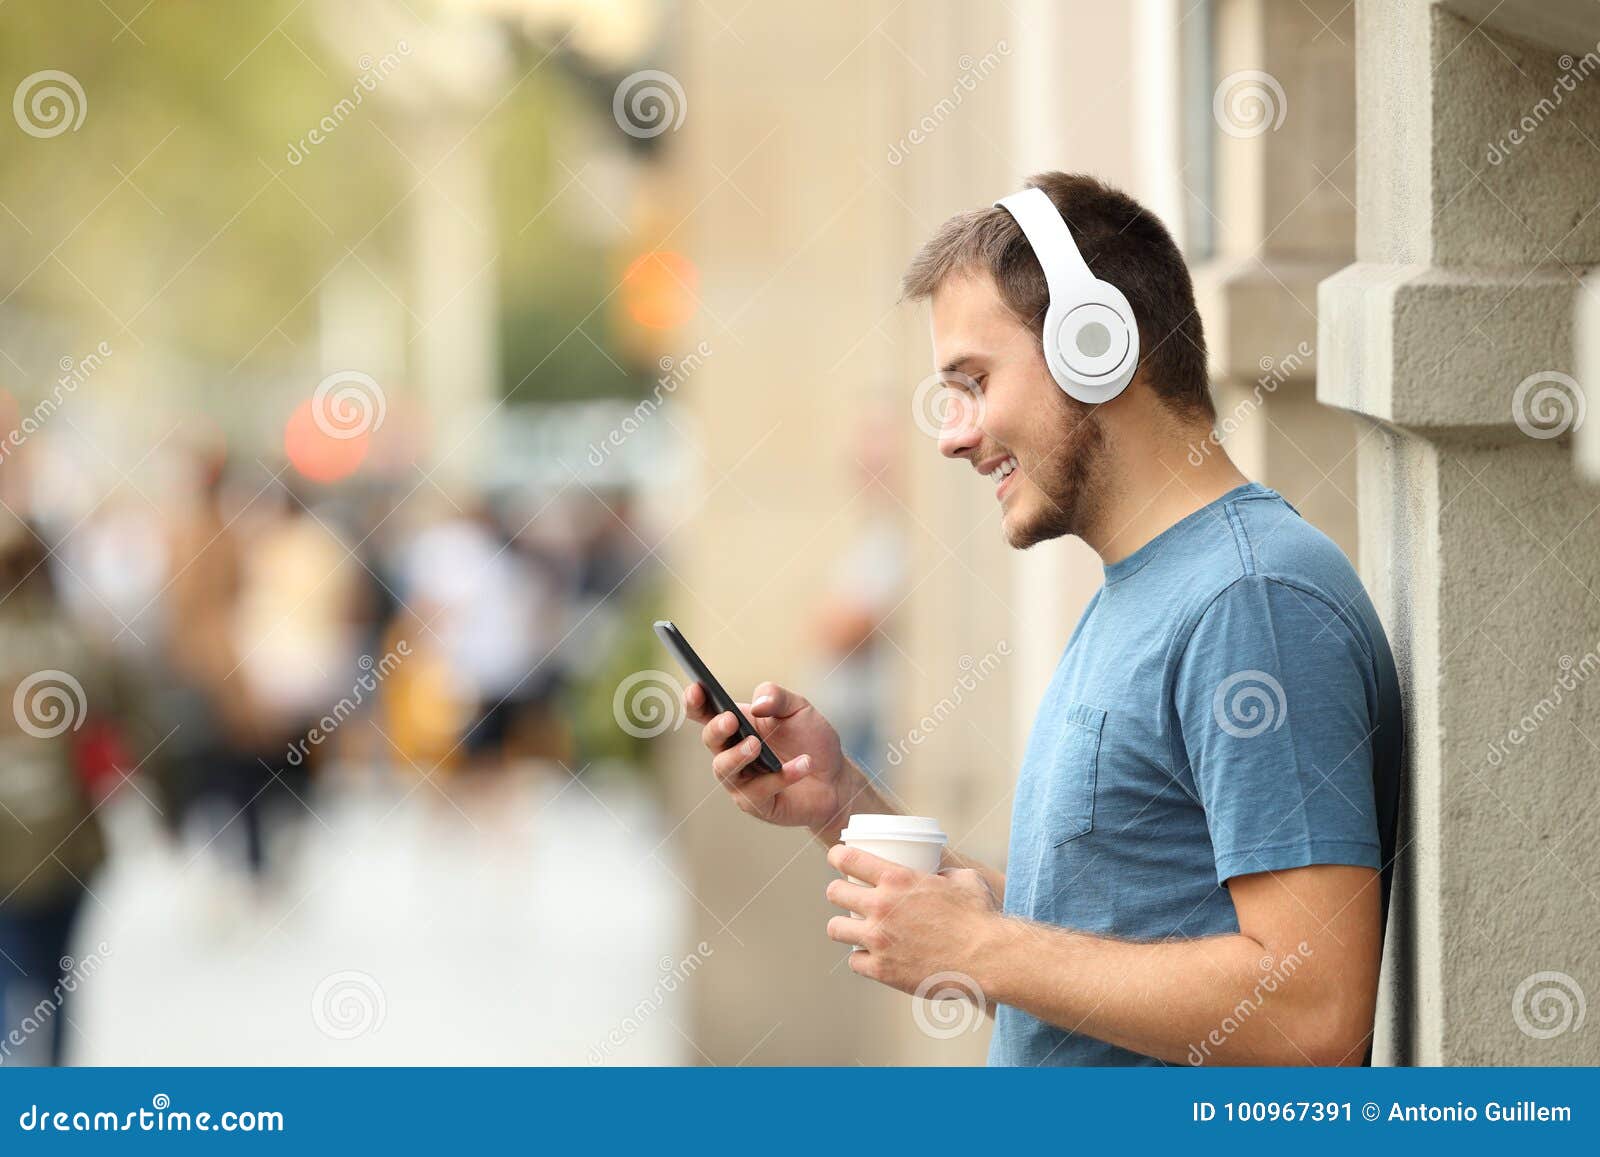 City hear. Смартфон и наушники на парне. Прослушка мужчина. Парень слушает музыку. Мужчина в профиль наушники.